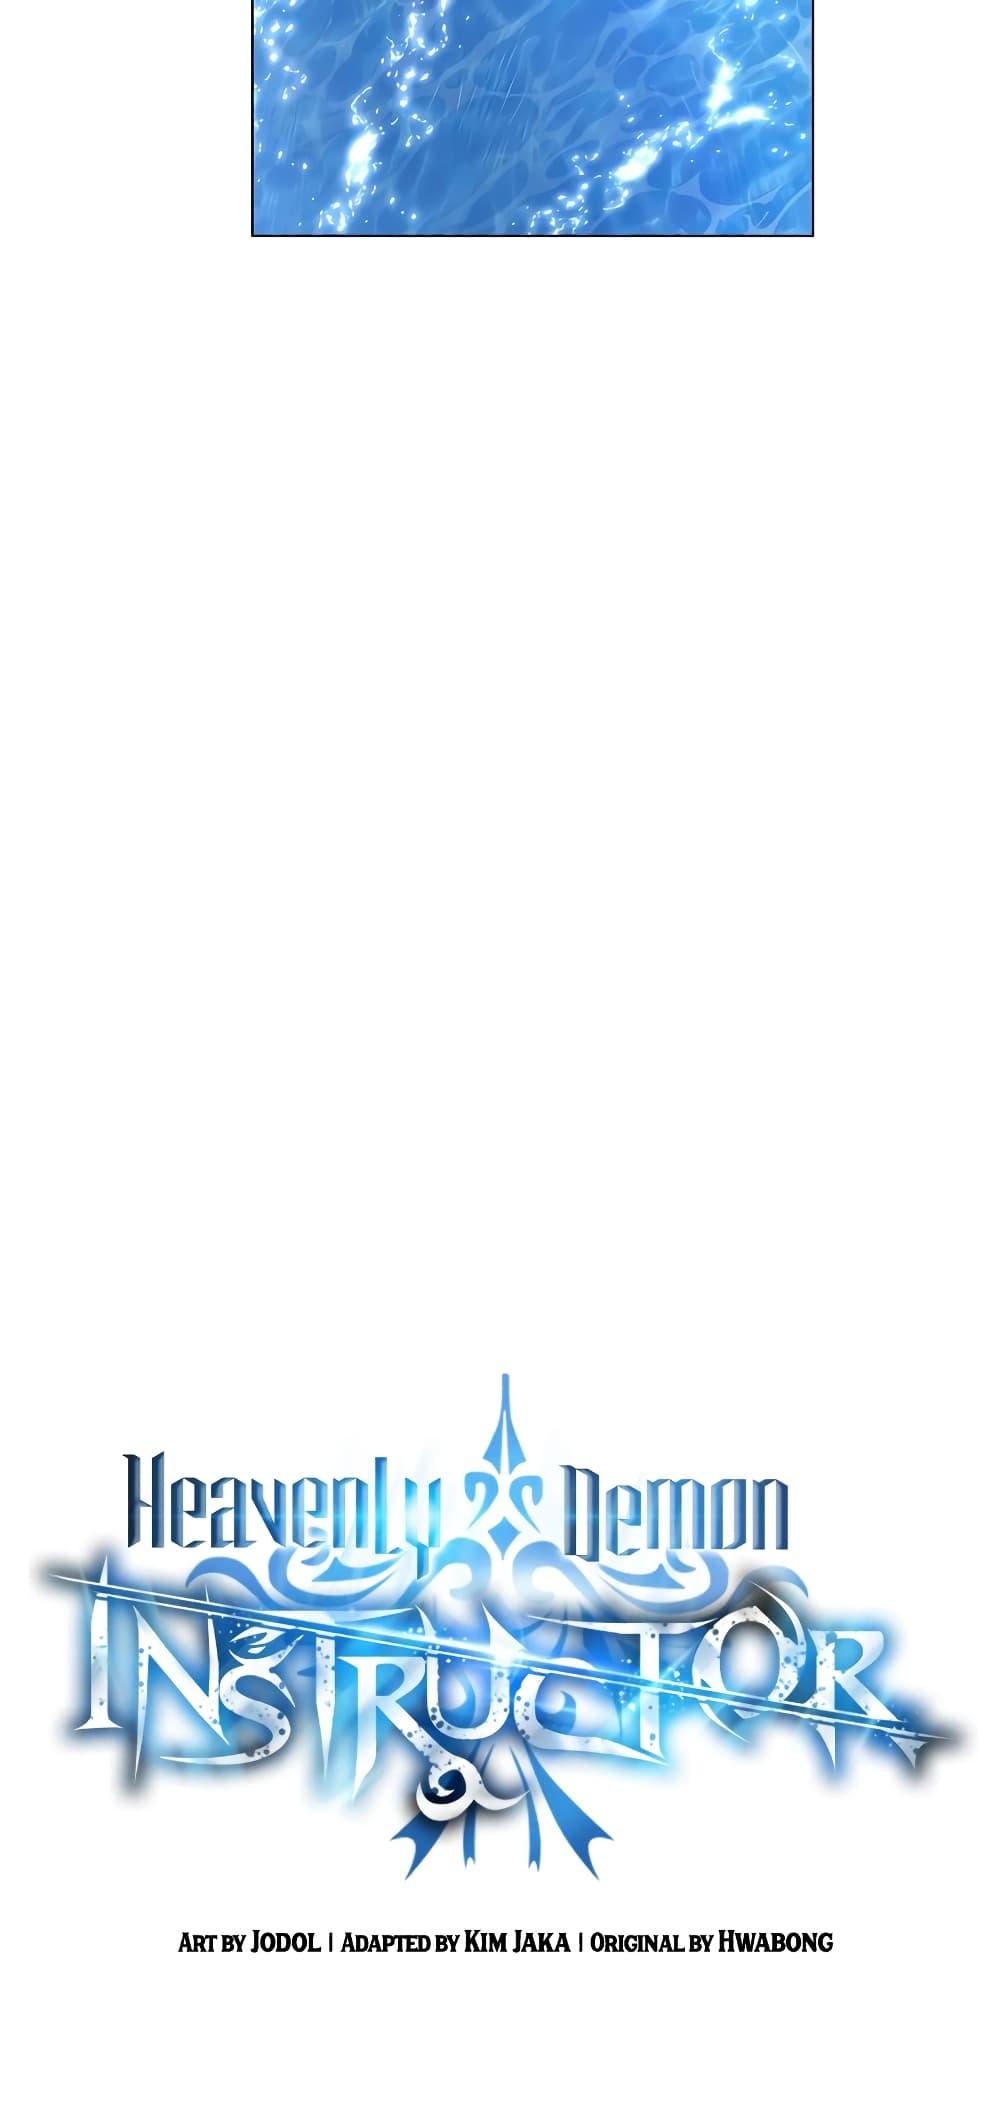 Heavenly Demon Instructor 92 11